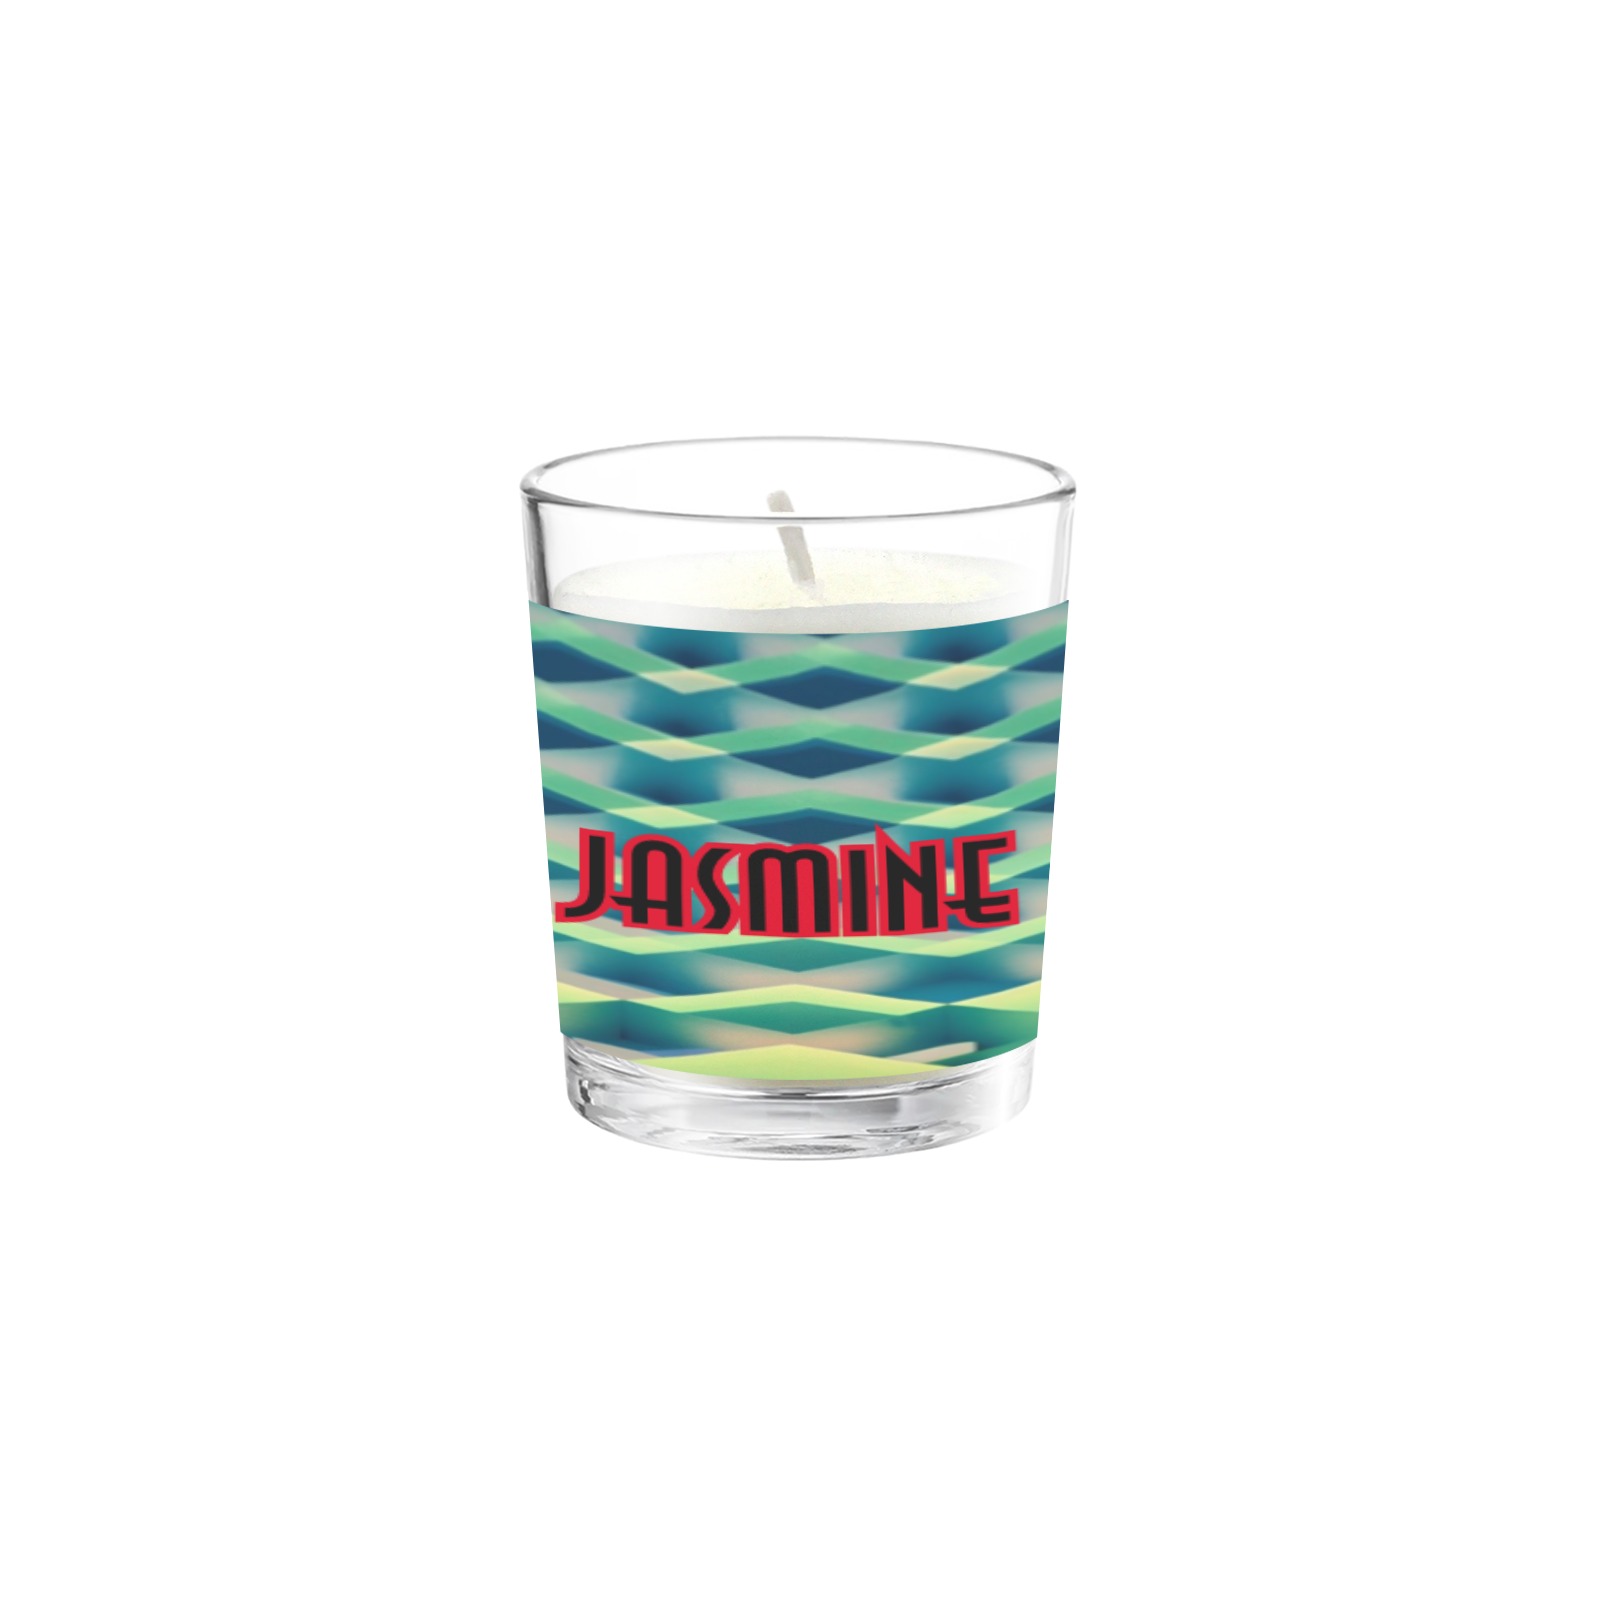 74 Jasmine Transparent Candle Cup (Jasmine)